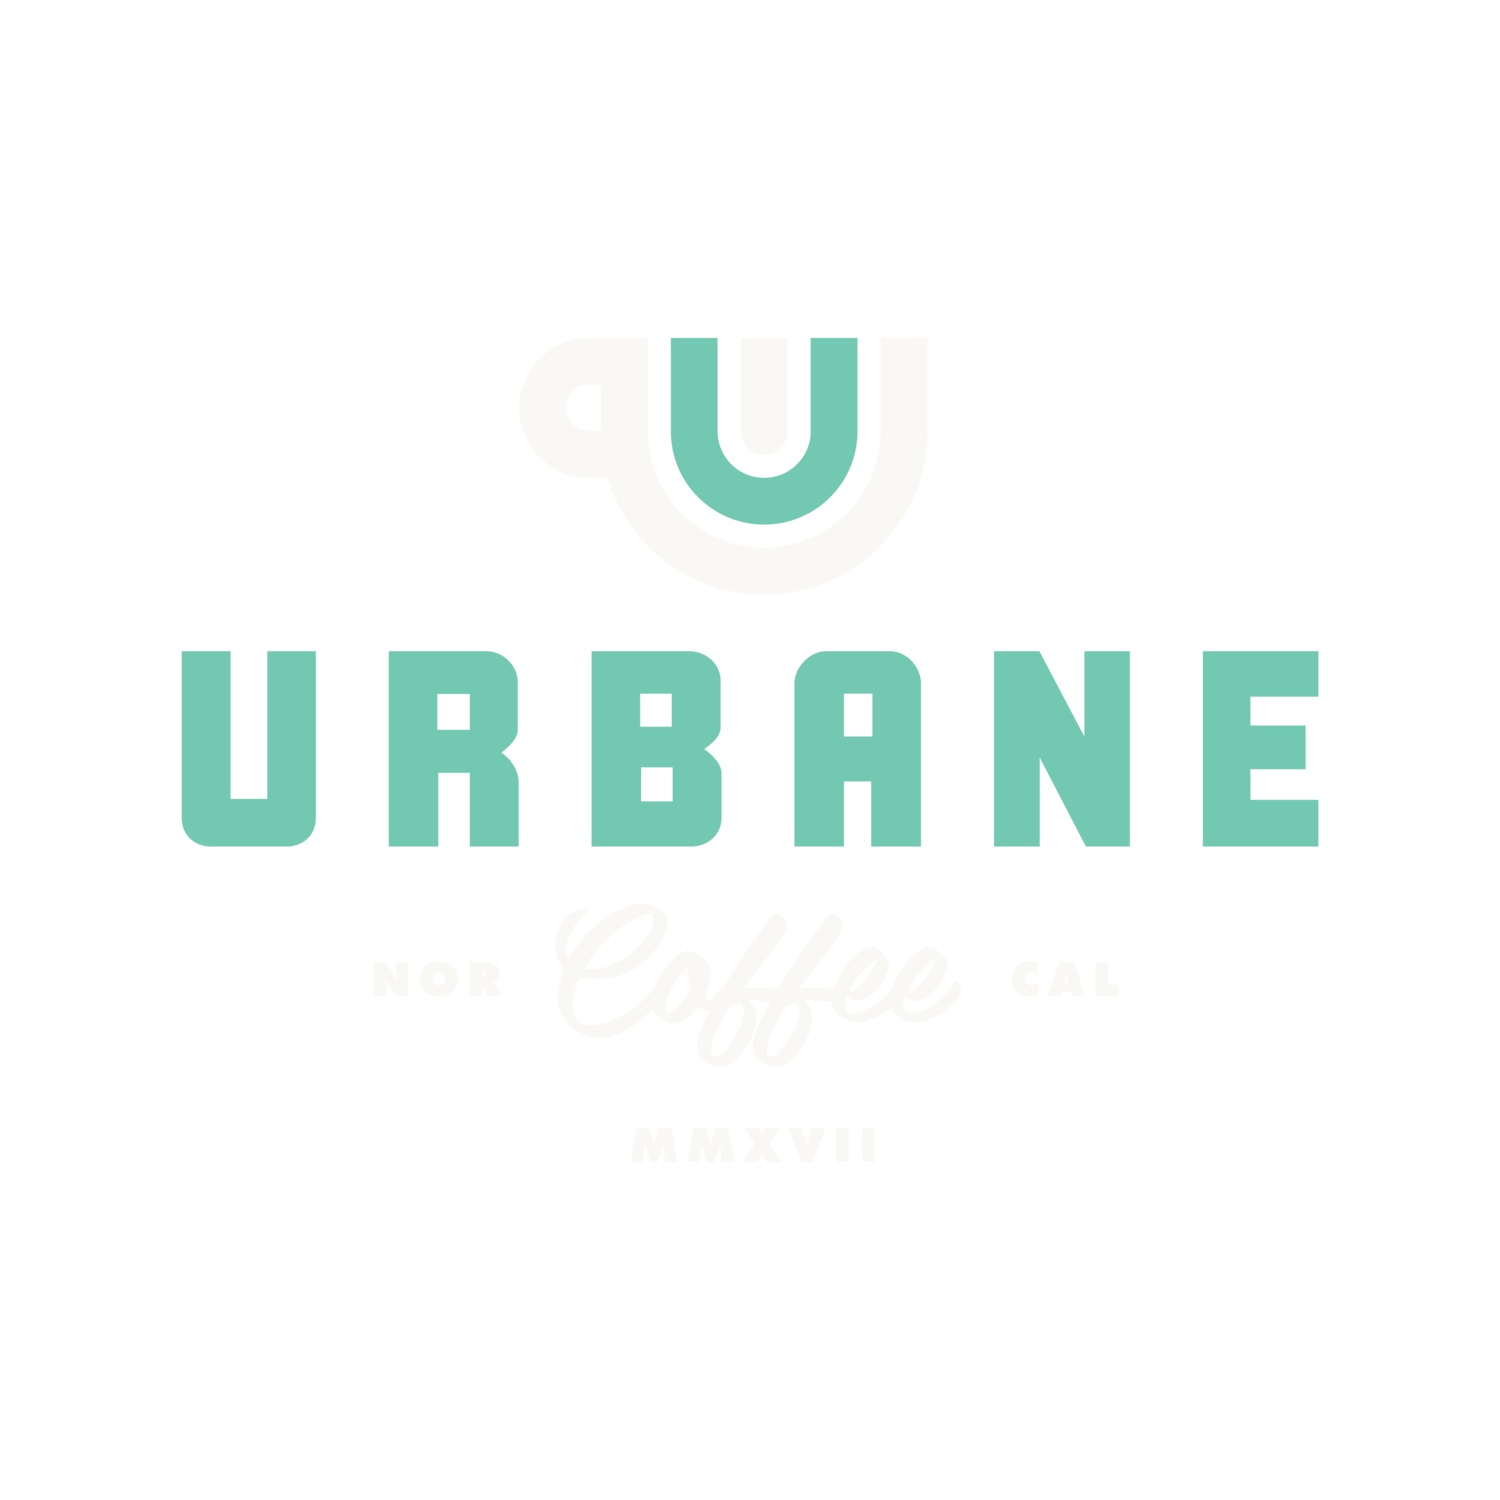 Urbane Coffee Cart